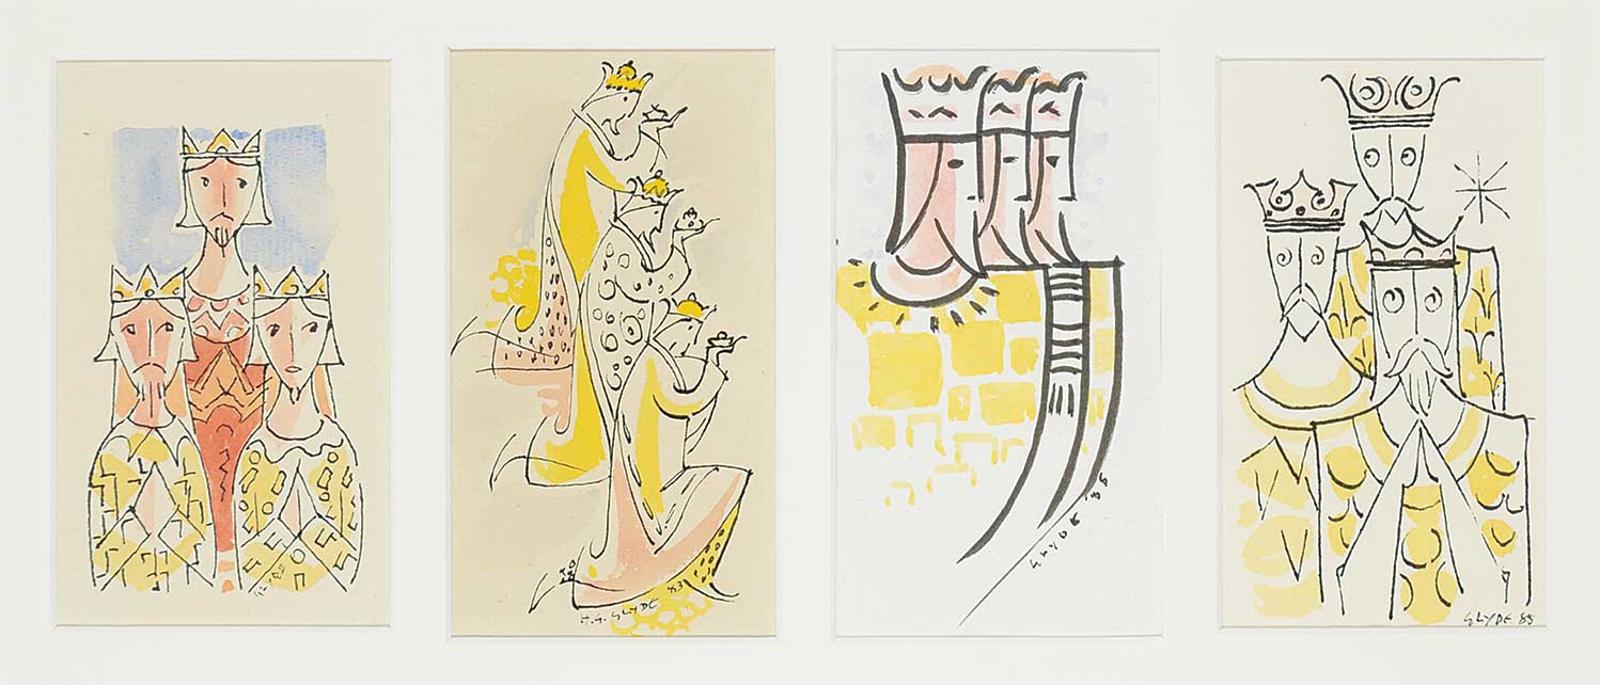 Henry George Glyde (1906-1998) - Untitled - We Three Kings in Four Ways